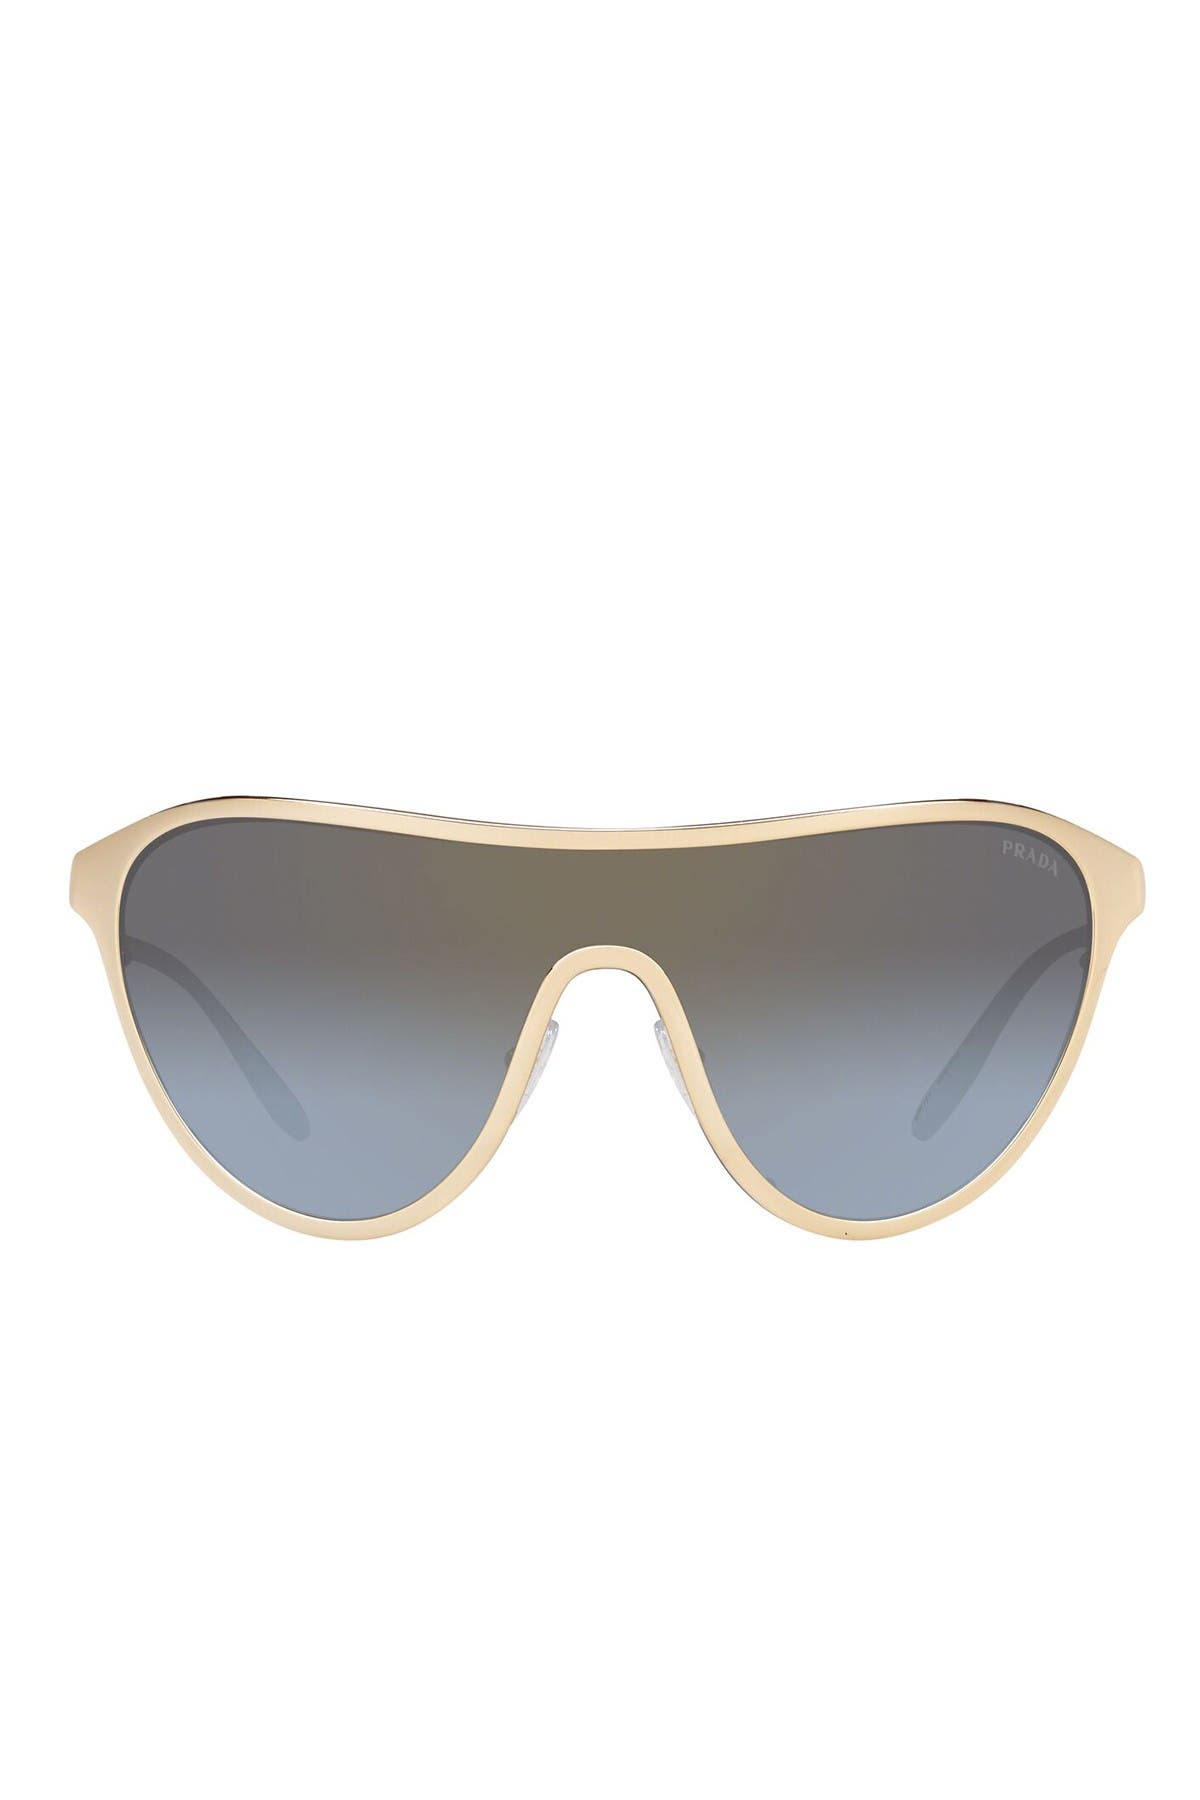 prada cateye sunglasses